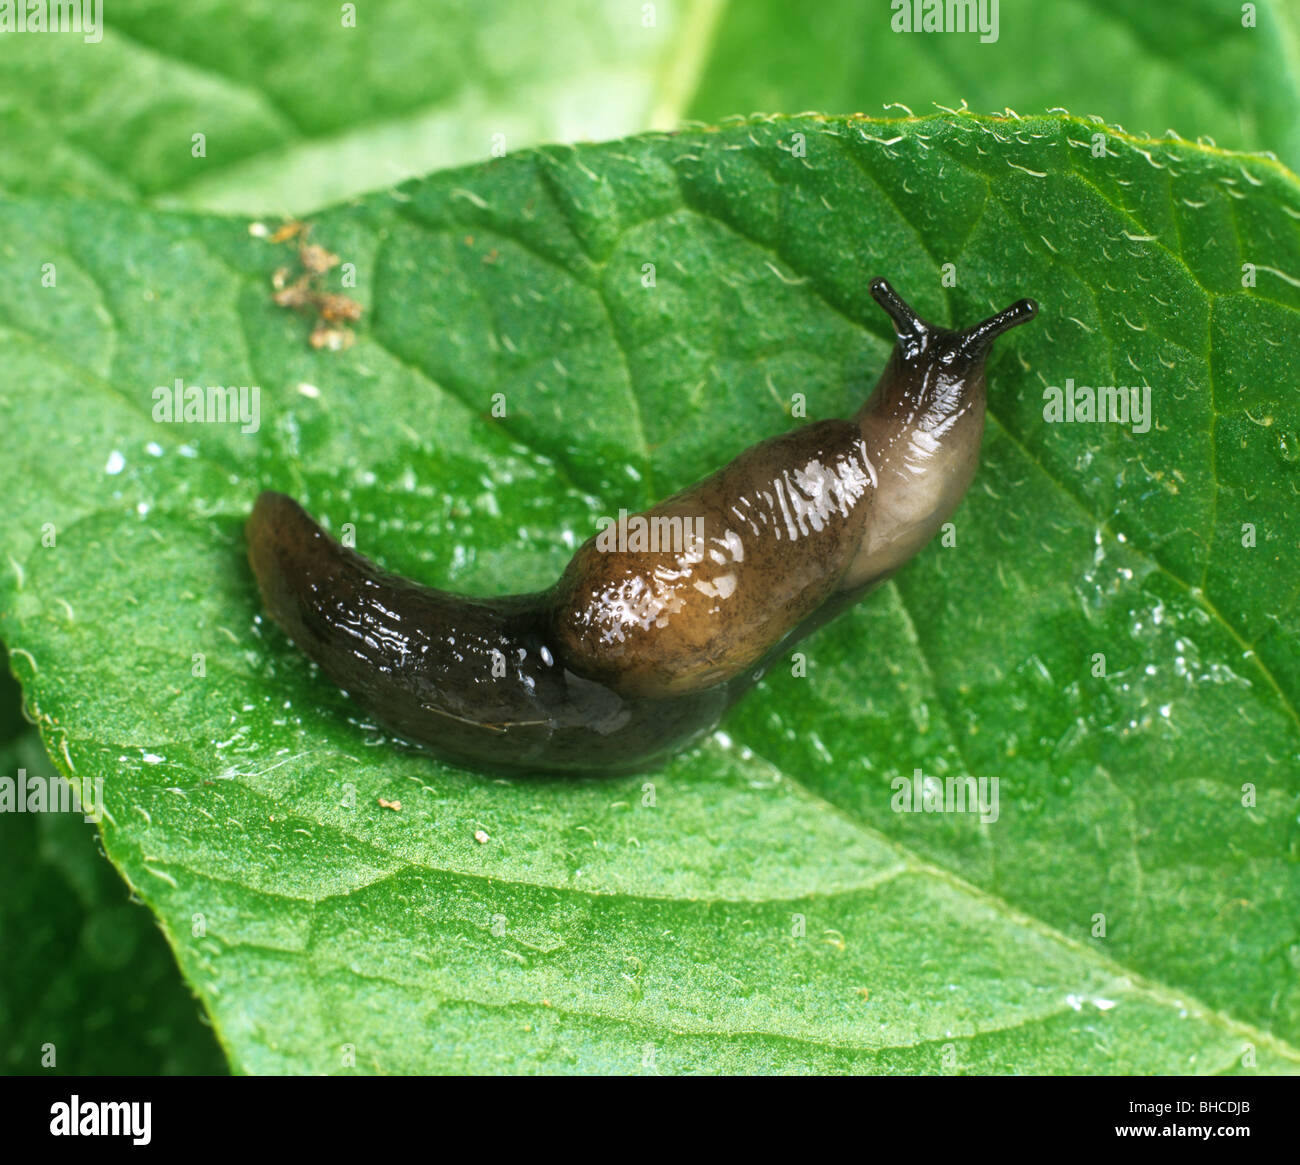 Slug with swollen mantle parasitised by Phasmarhabditis nematodes Stock Photo